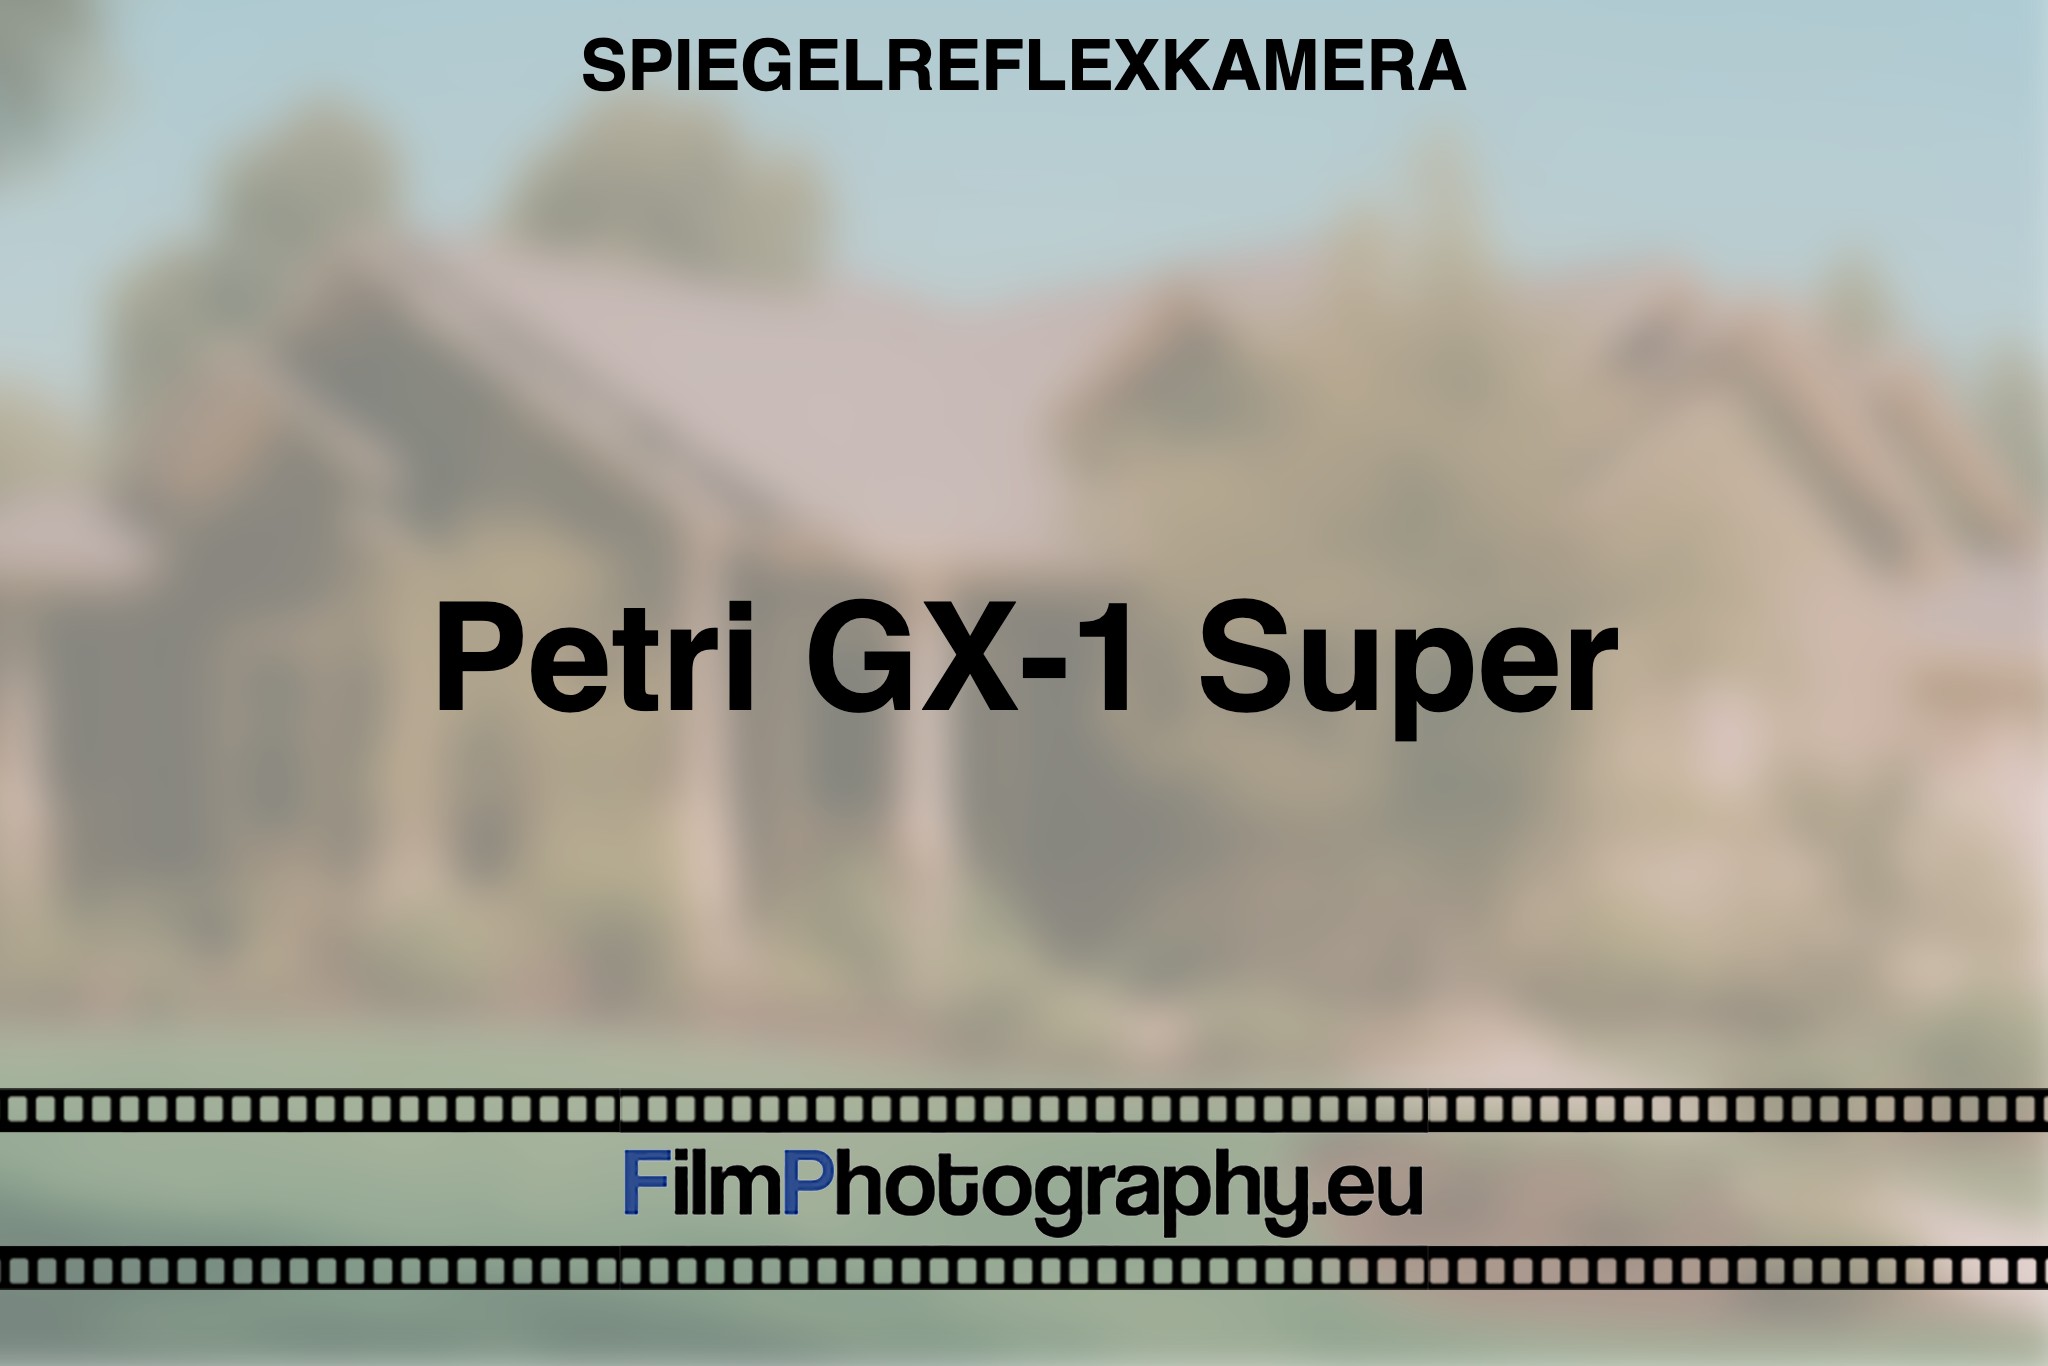 petri-gx-1-super-spiegelreflexkamera-bnv